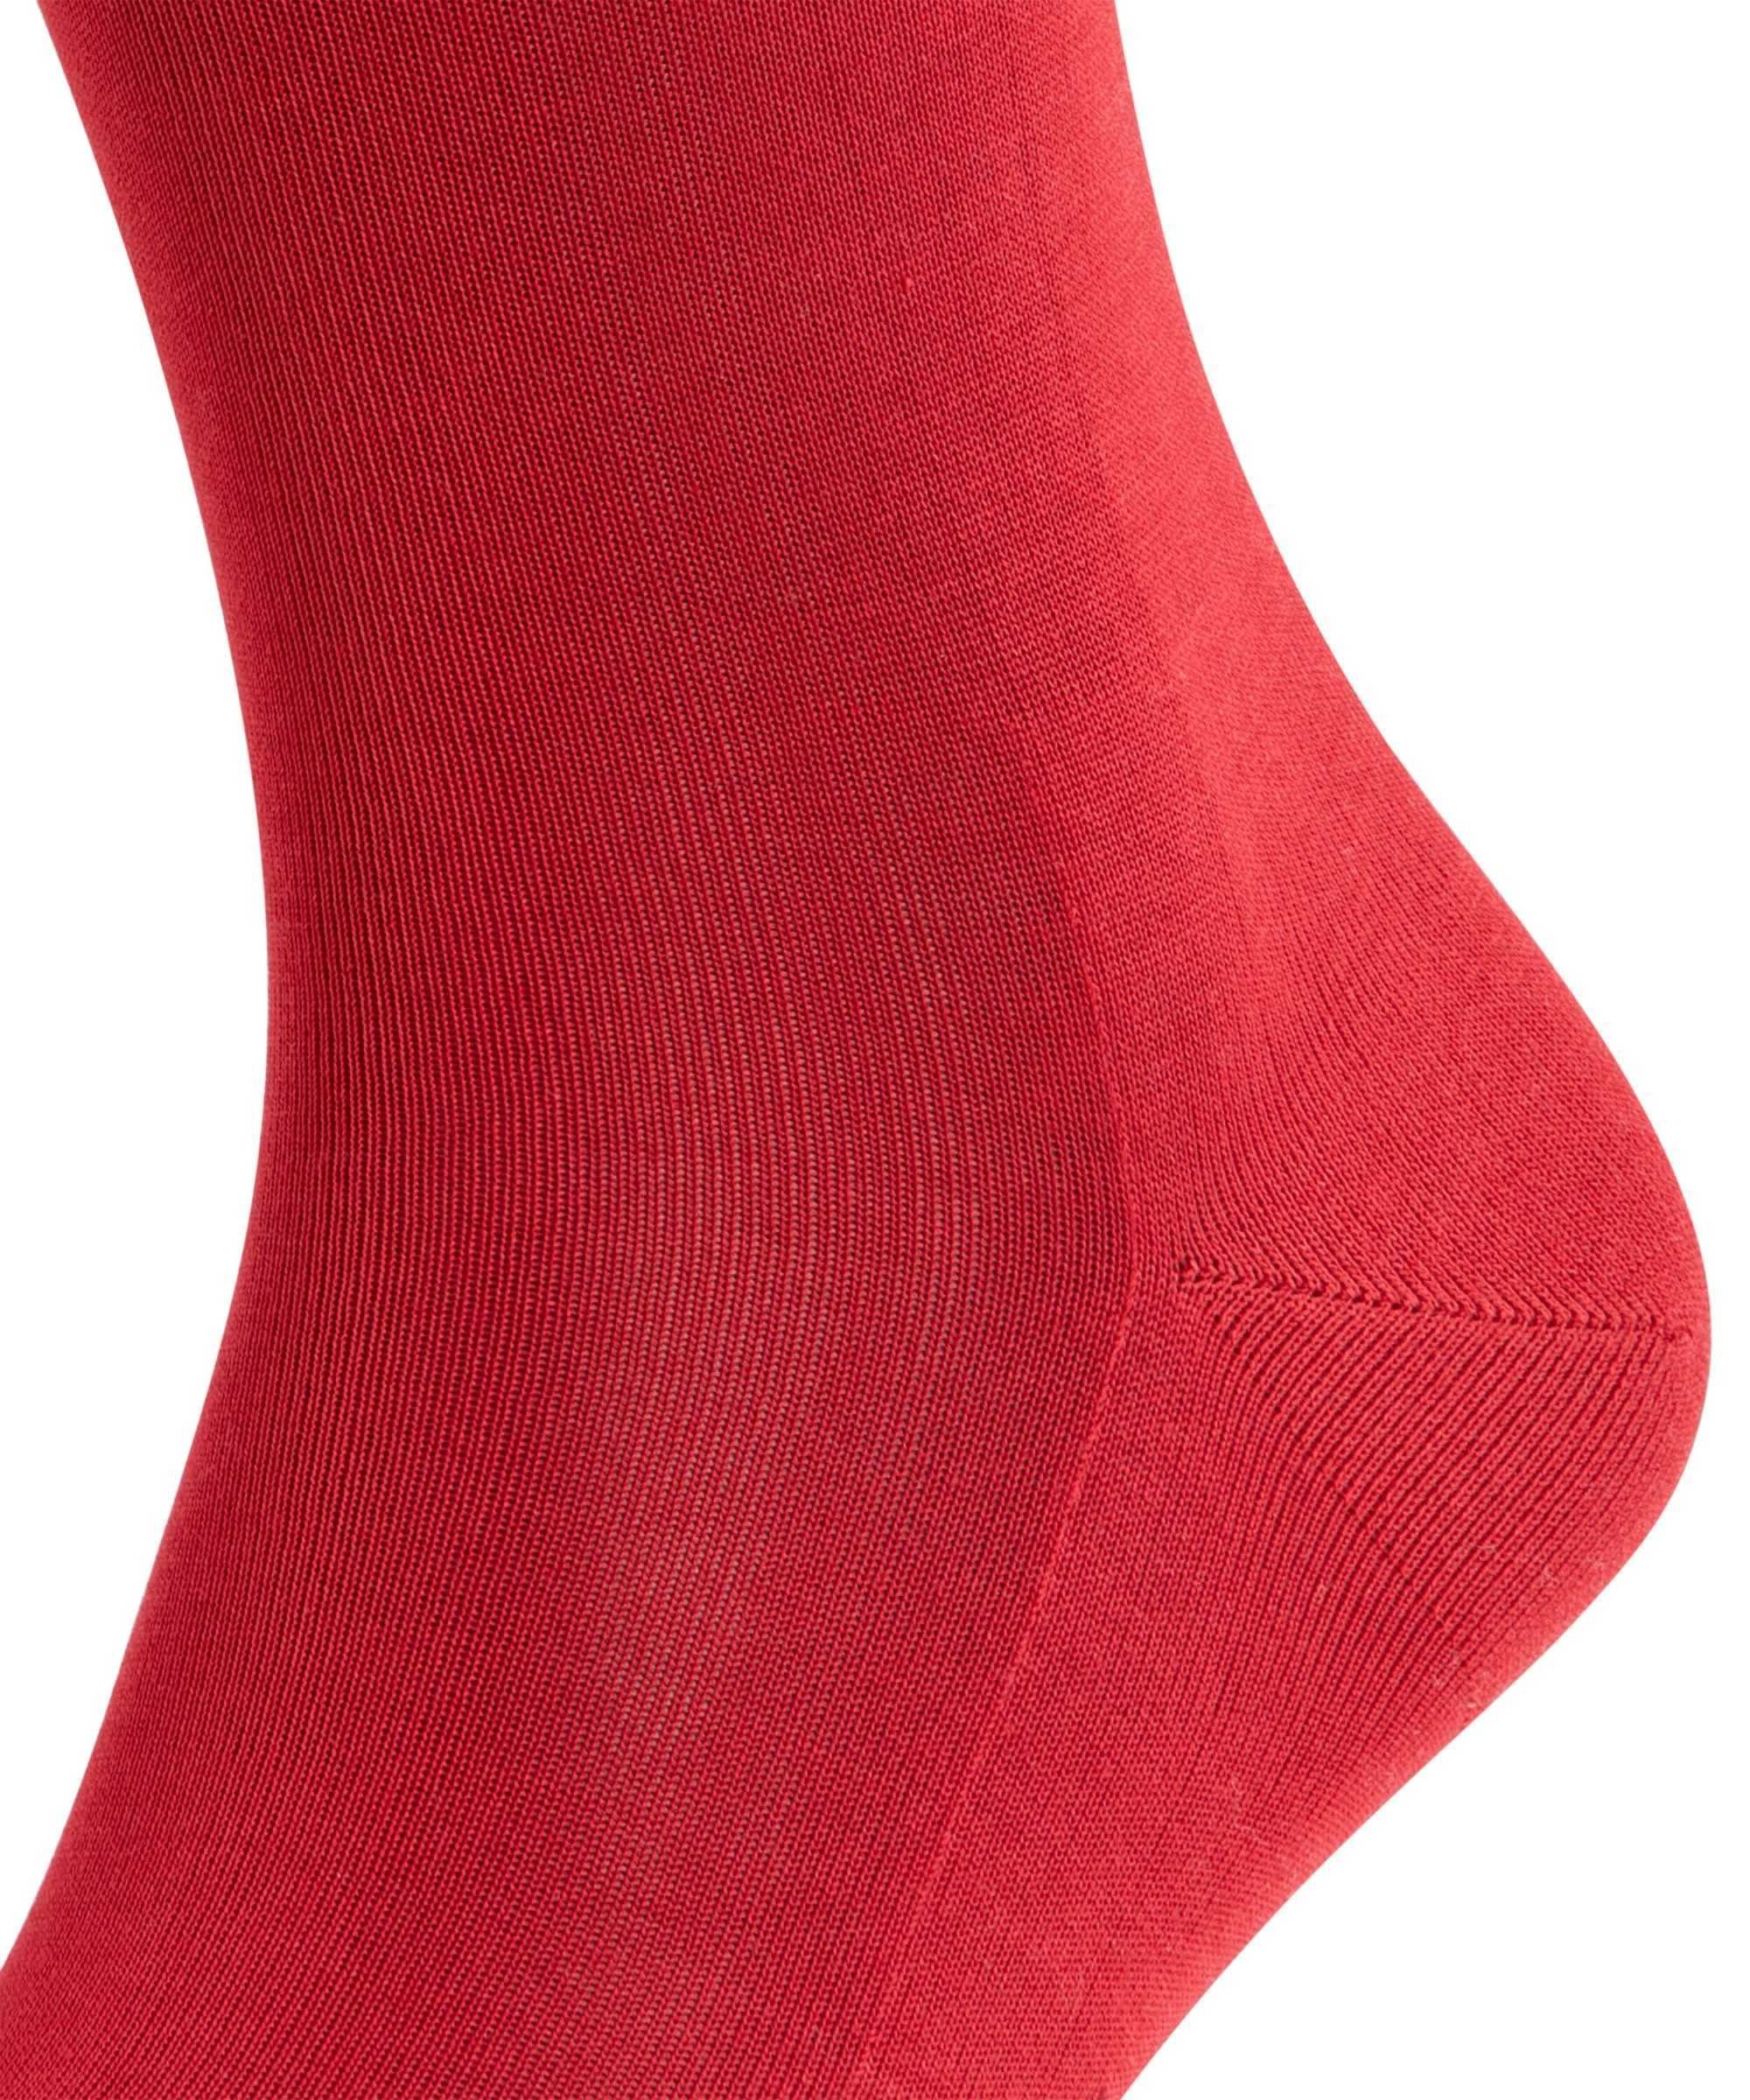 Rot Tiago, Herren Kurzsocken - Socken Baumwolle, Logo Strümpfe, FALKE